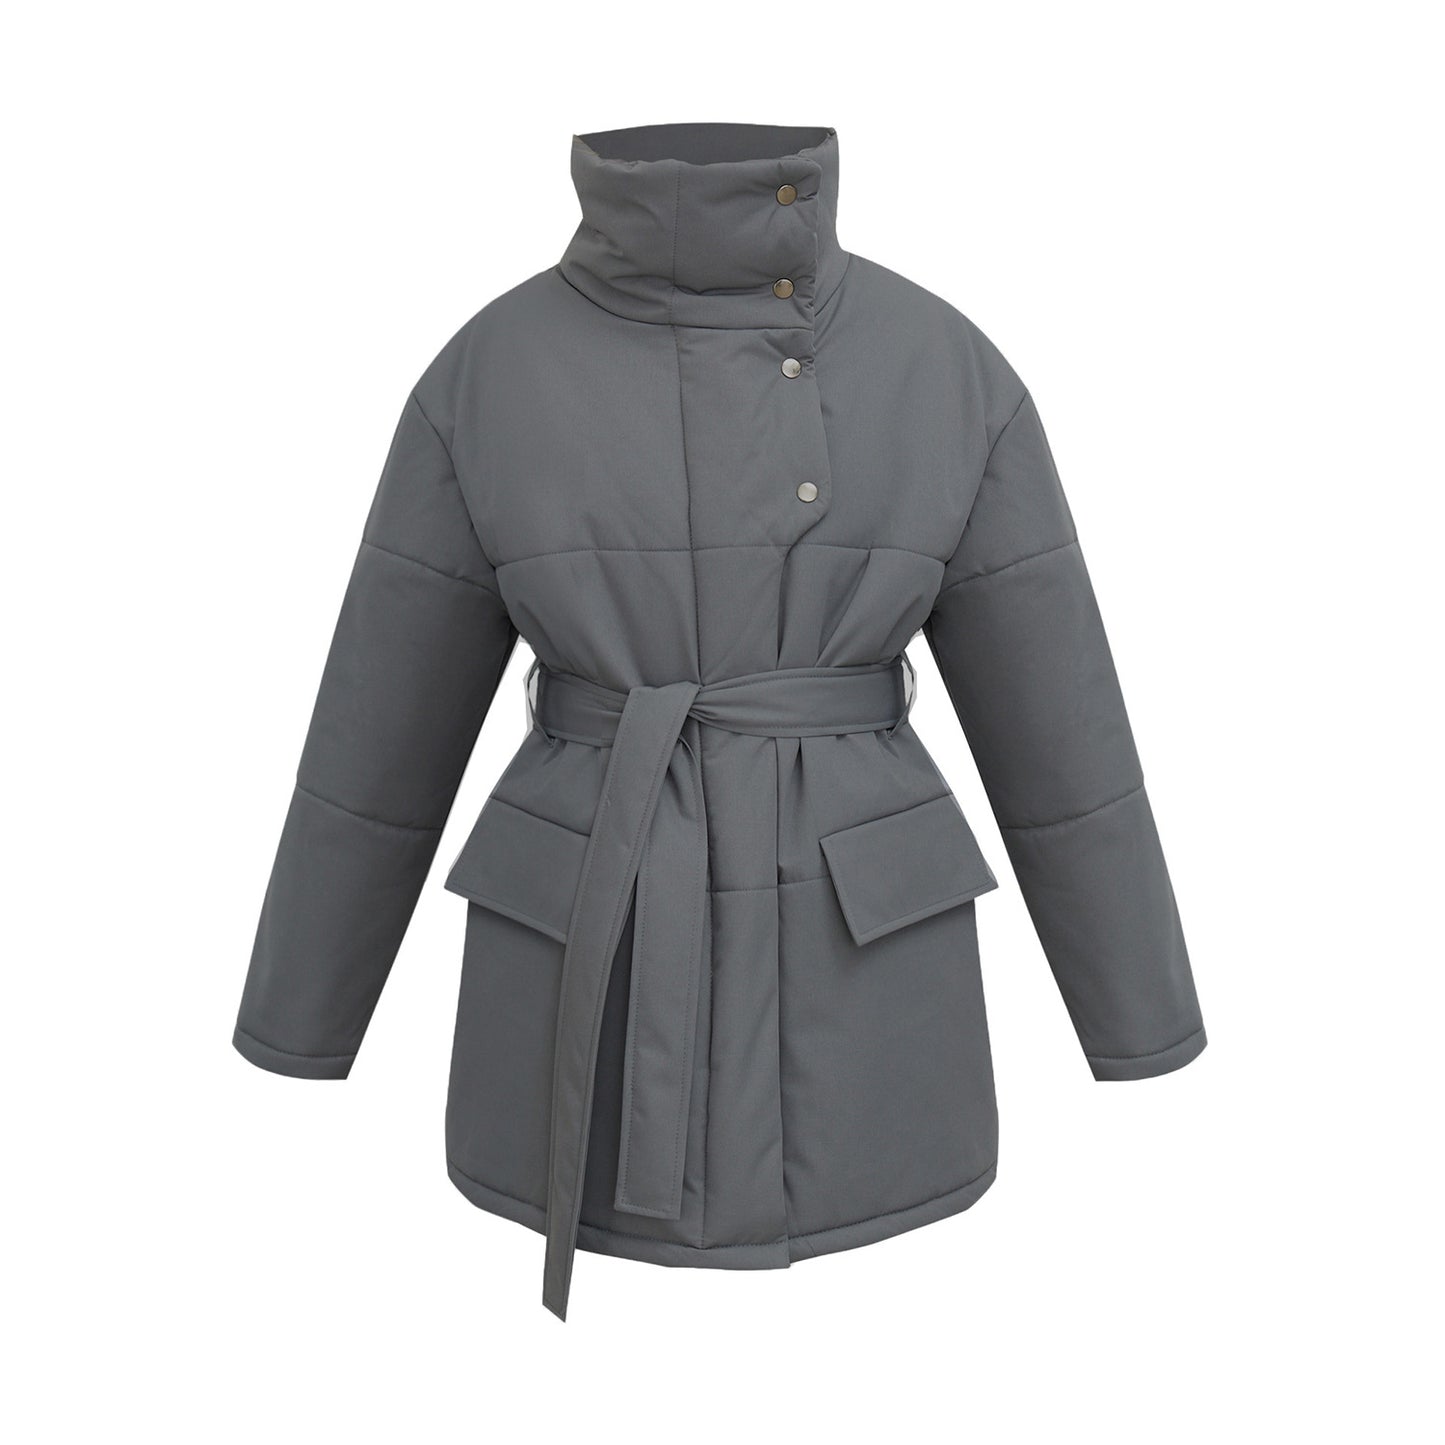 Stand-up Collar Cotton-padded Coat Coat Irregular Mid-length